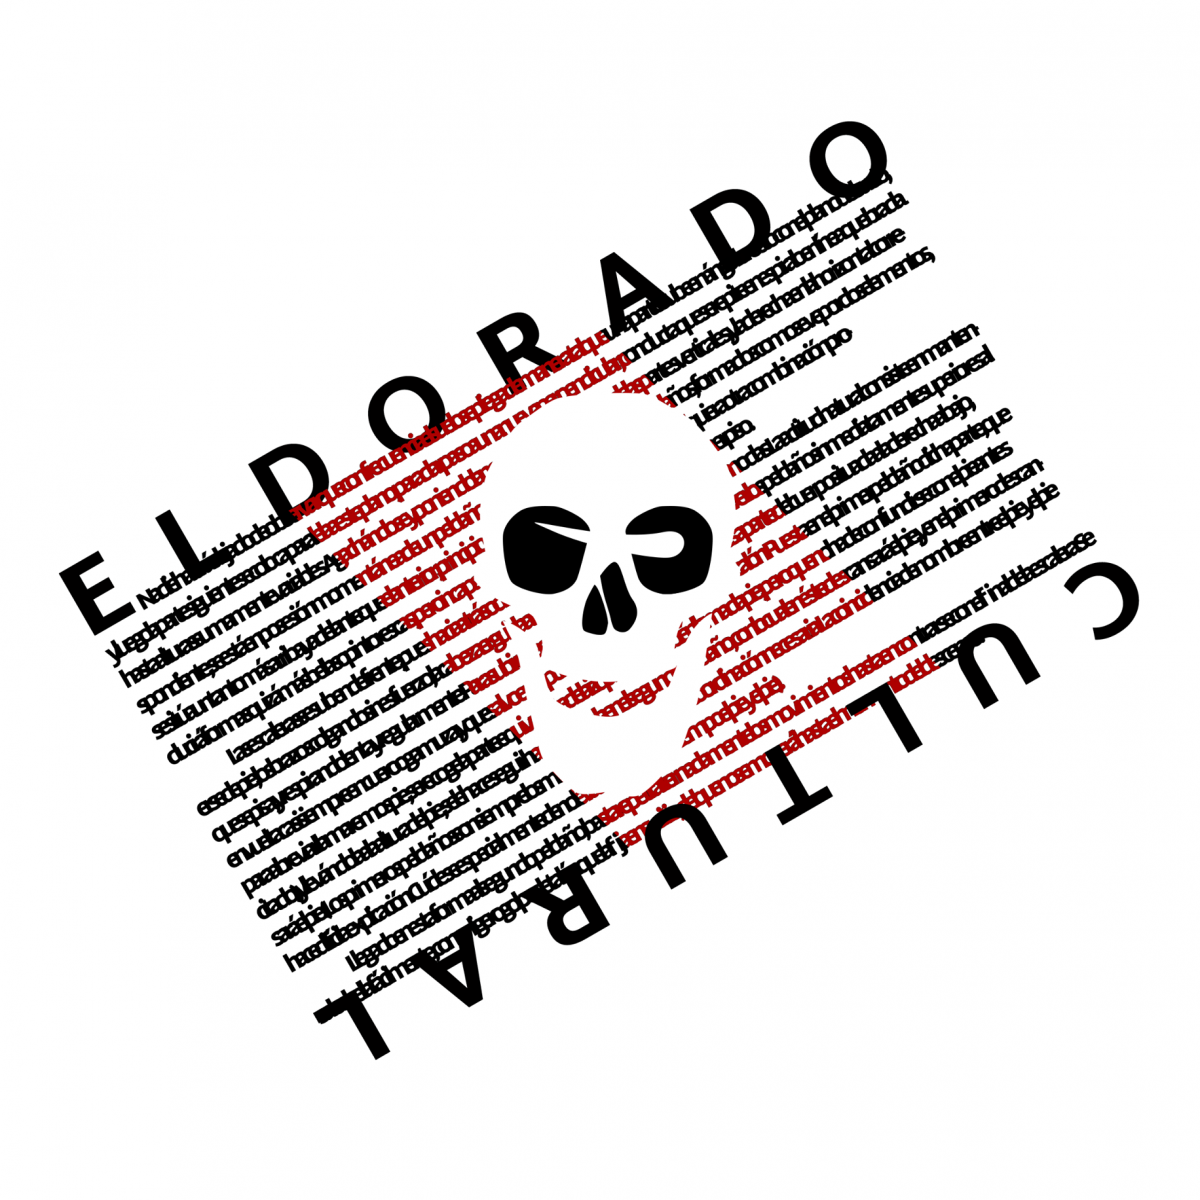 https://www.toledo.es/wp-content/uploads/2022/06/251860221_417521946718076_3759672822635462219_n-1200x1200.png. Ciclo #Somoscooperativa